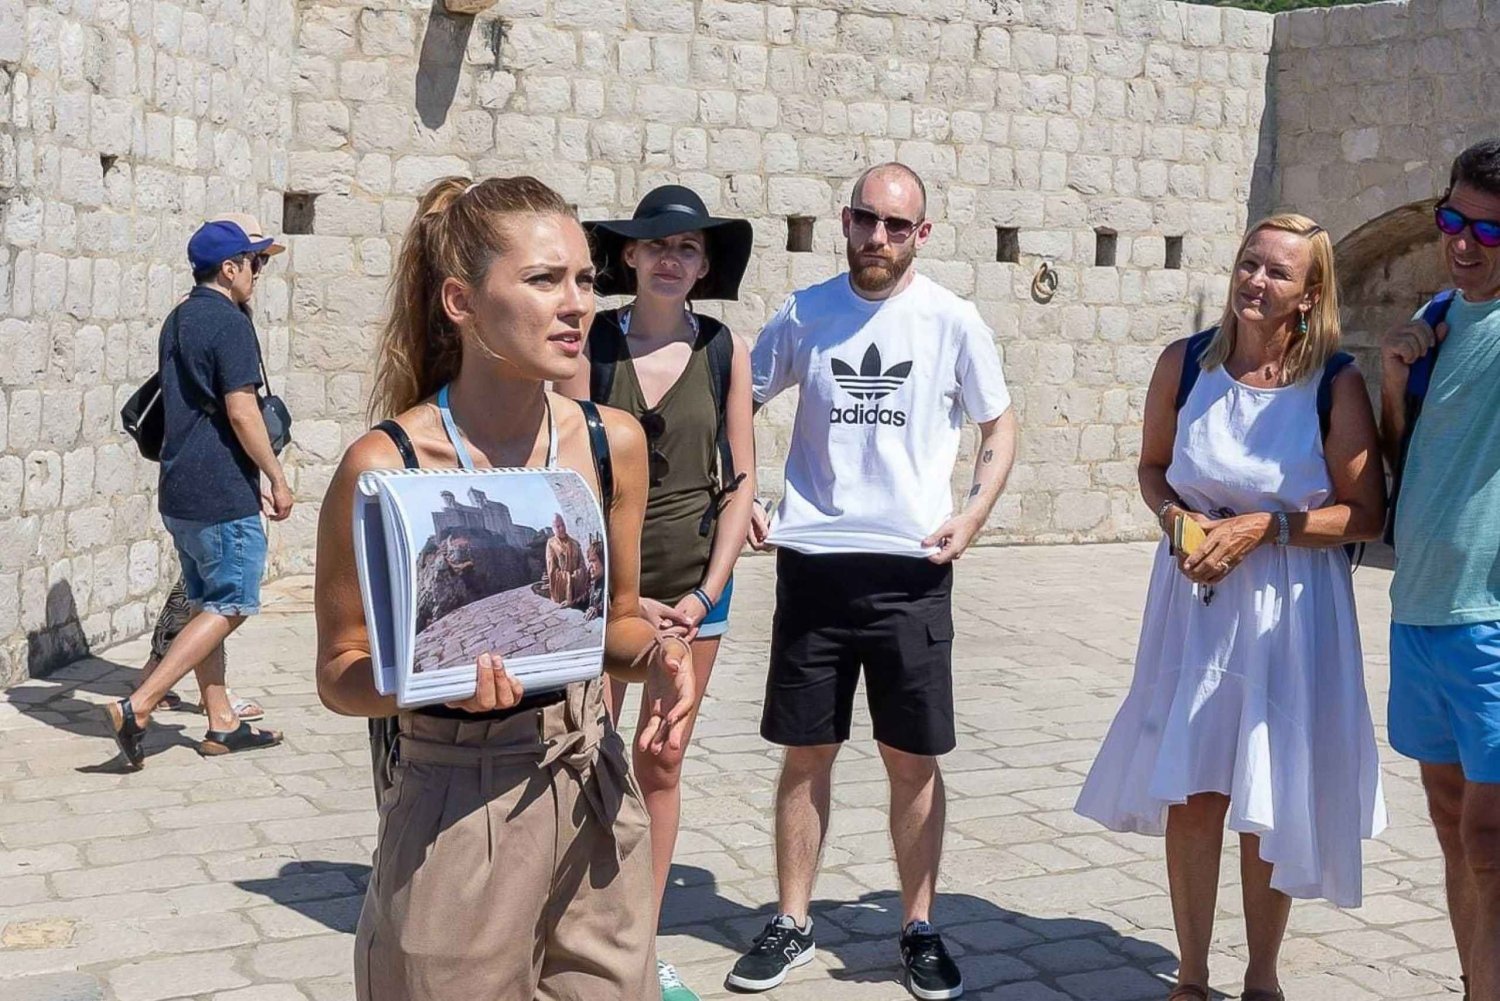 Dubrovnik: King's Landing and the Iron Throne Walking Tour